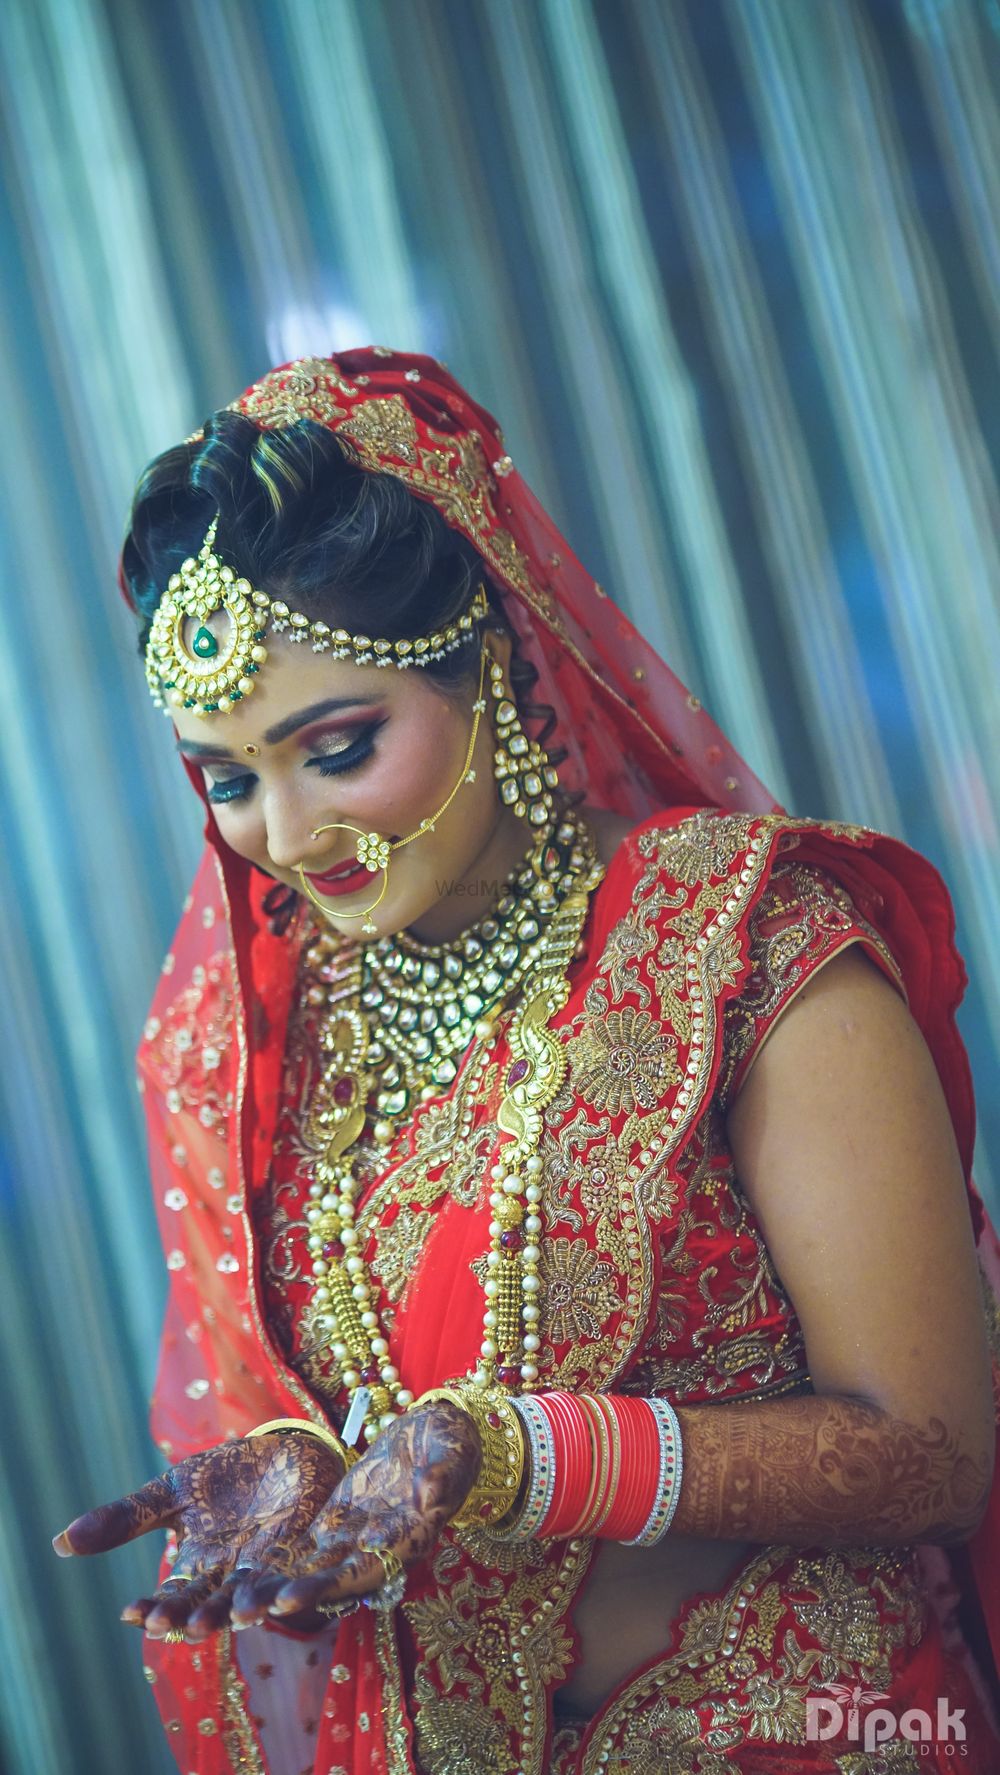 Photo From Brides Of #dipakstudios - By Dipak Studios